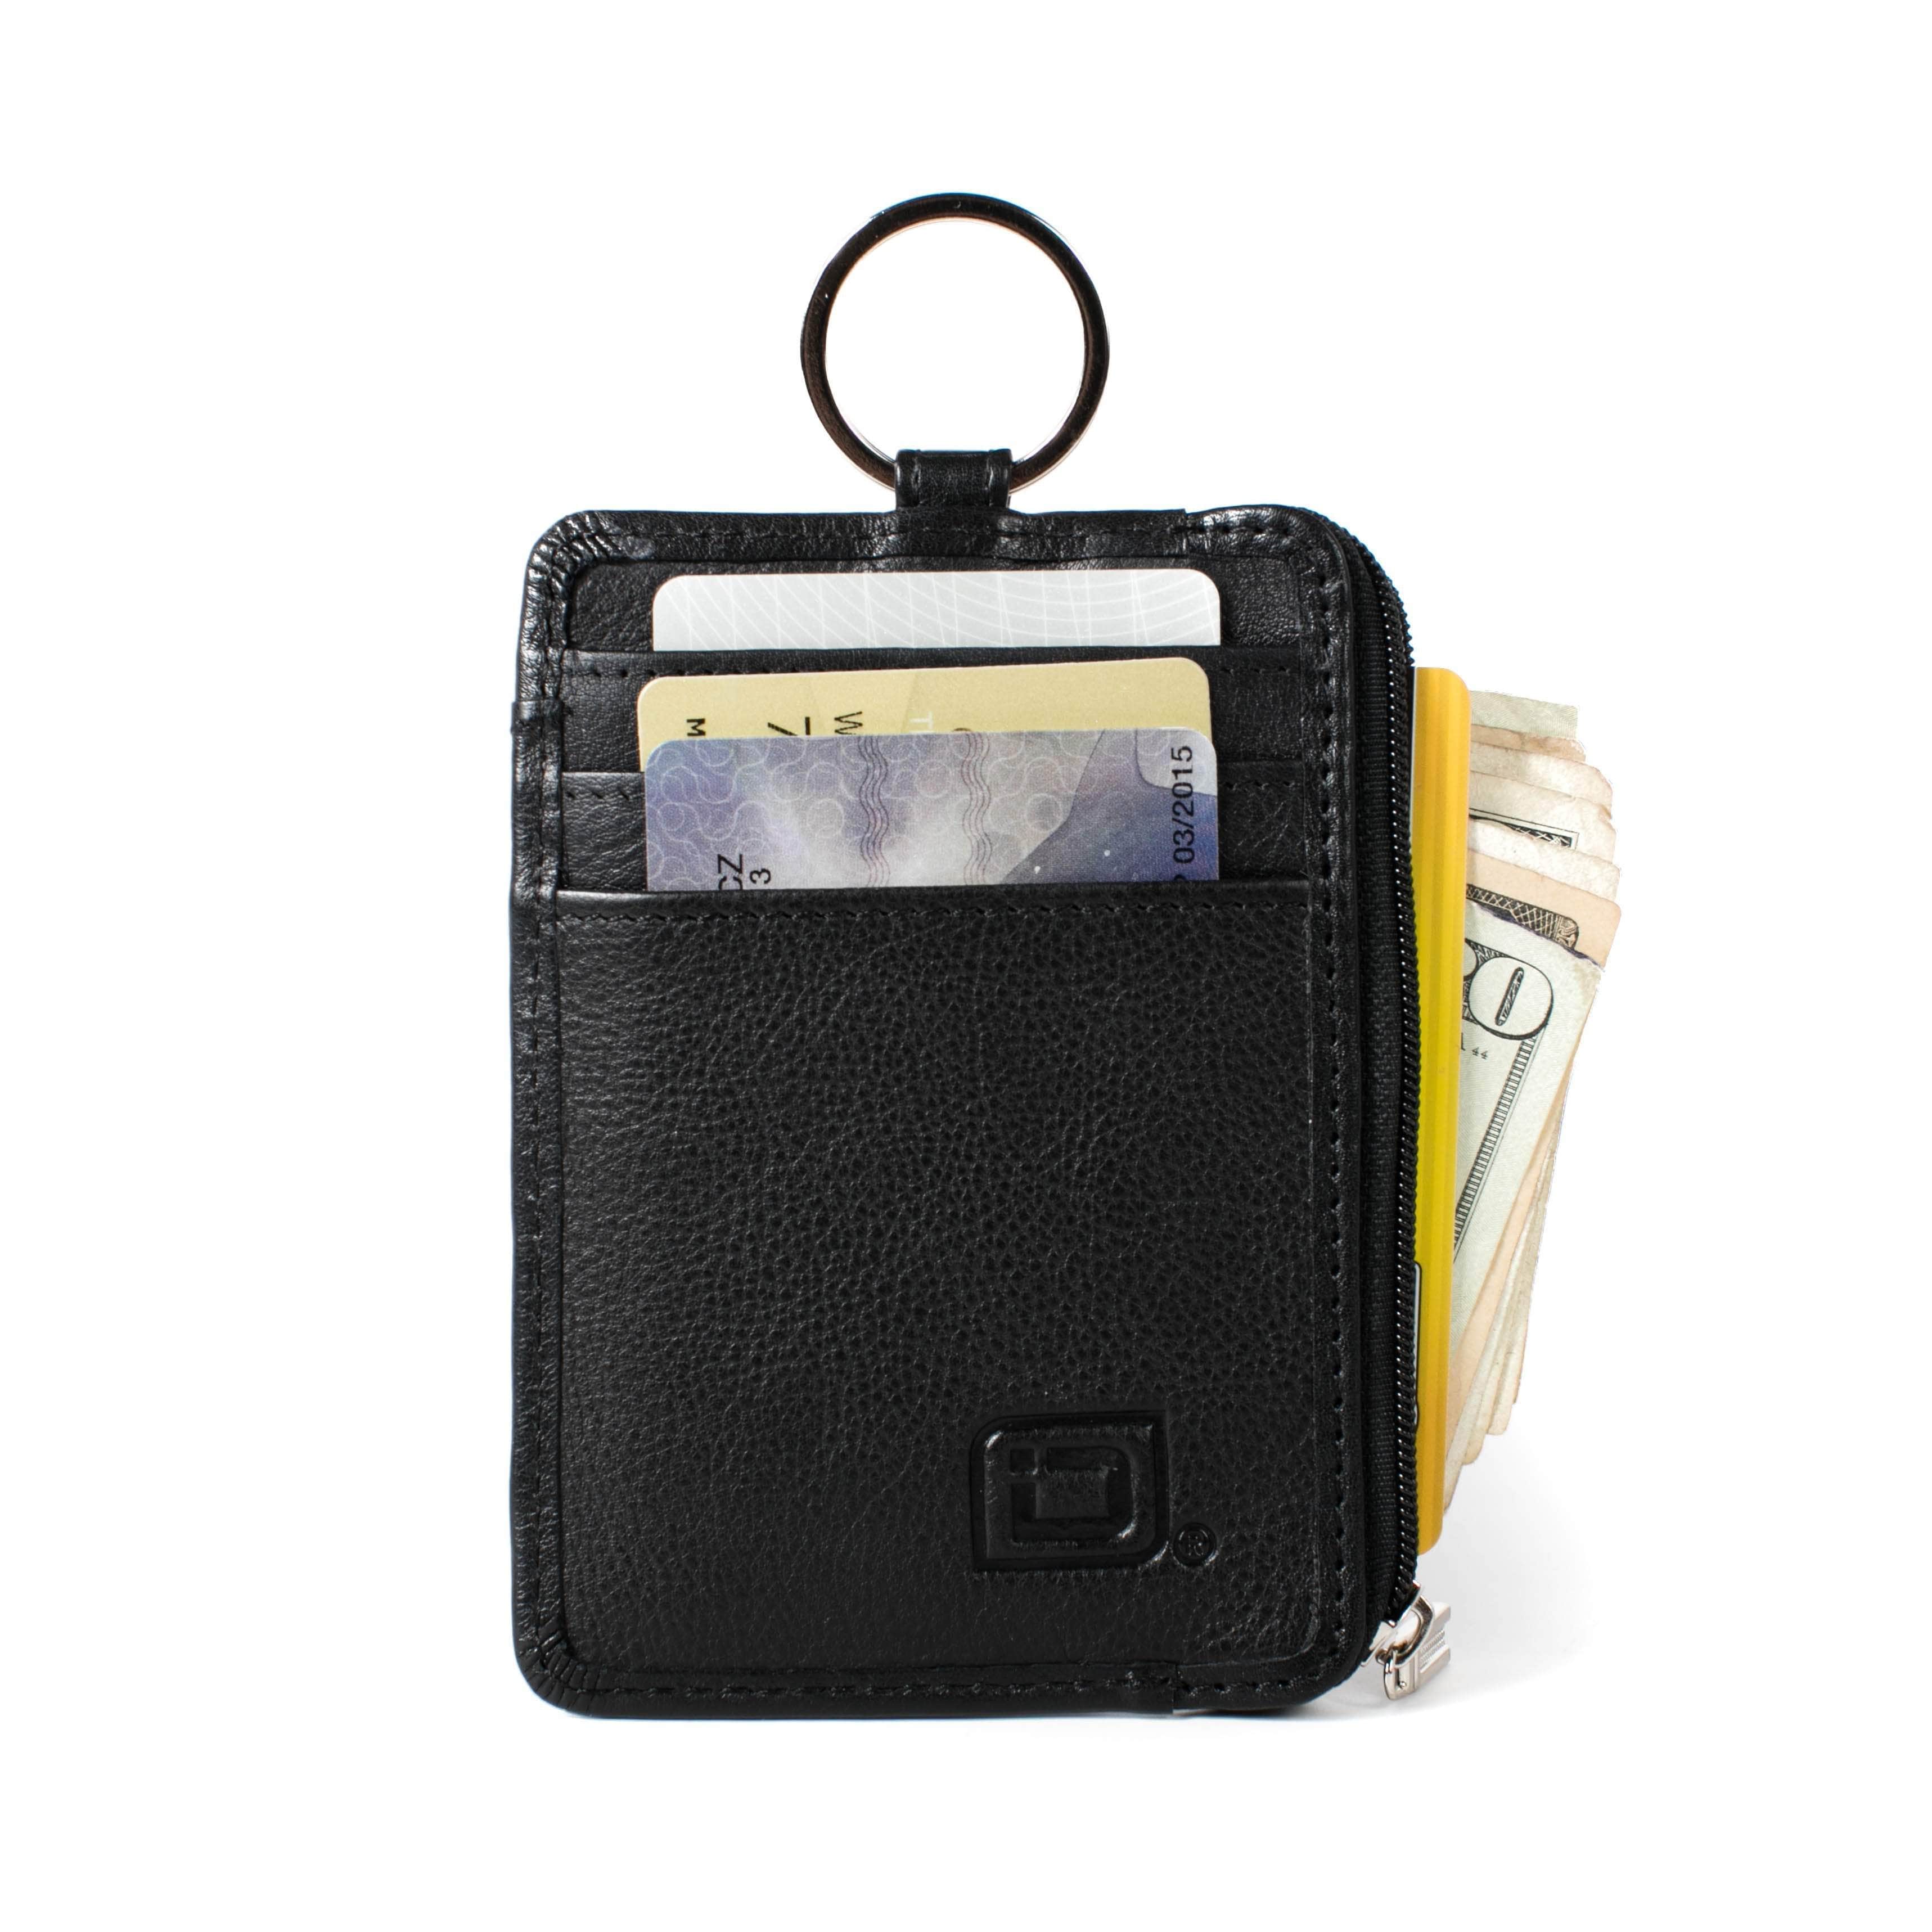 ID Stronghold Badgeholder Mini Leather Black RFID Blocking Leather Badge Holder Portrait Style